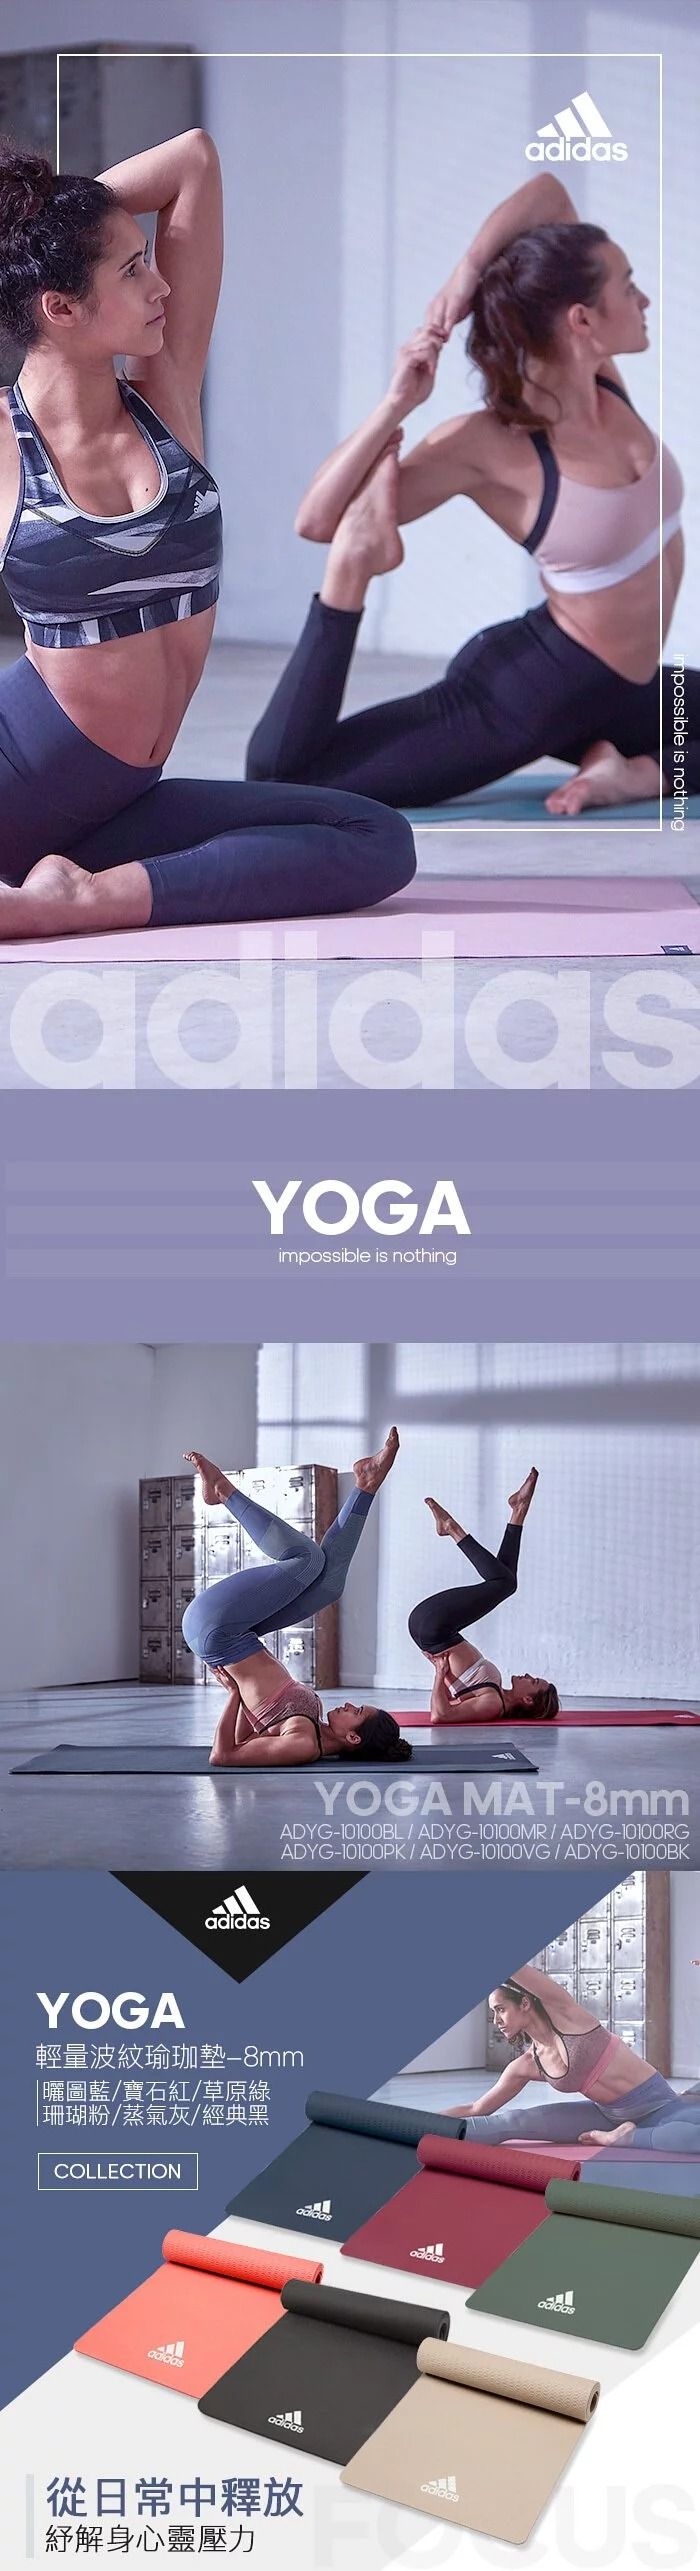 防滑 adidas 瑜珈墊 防滑 瑜珈墊 雙面